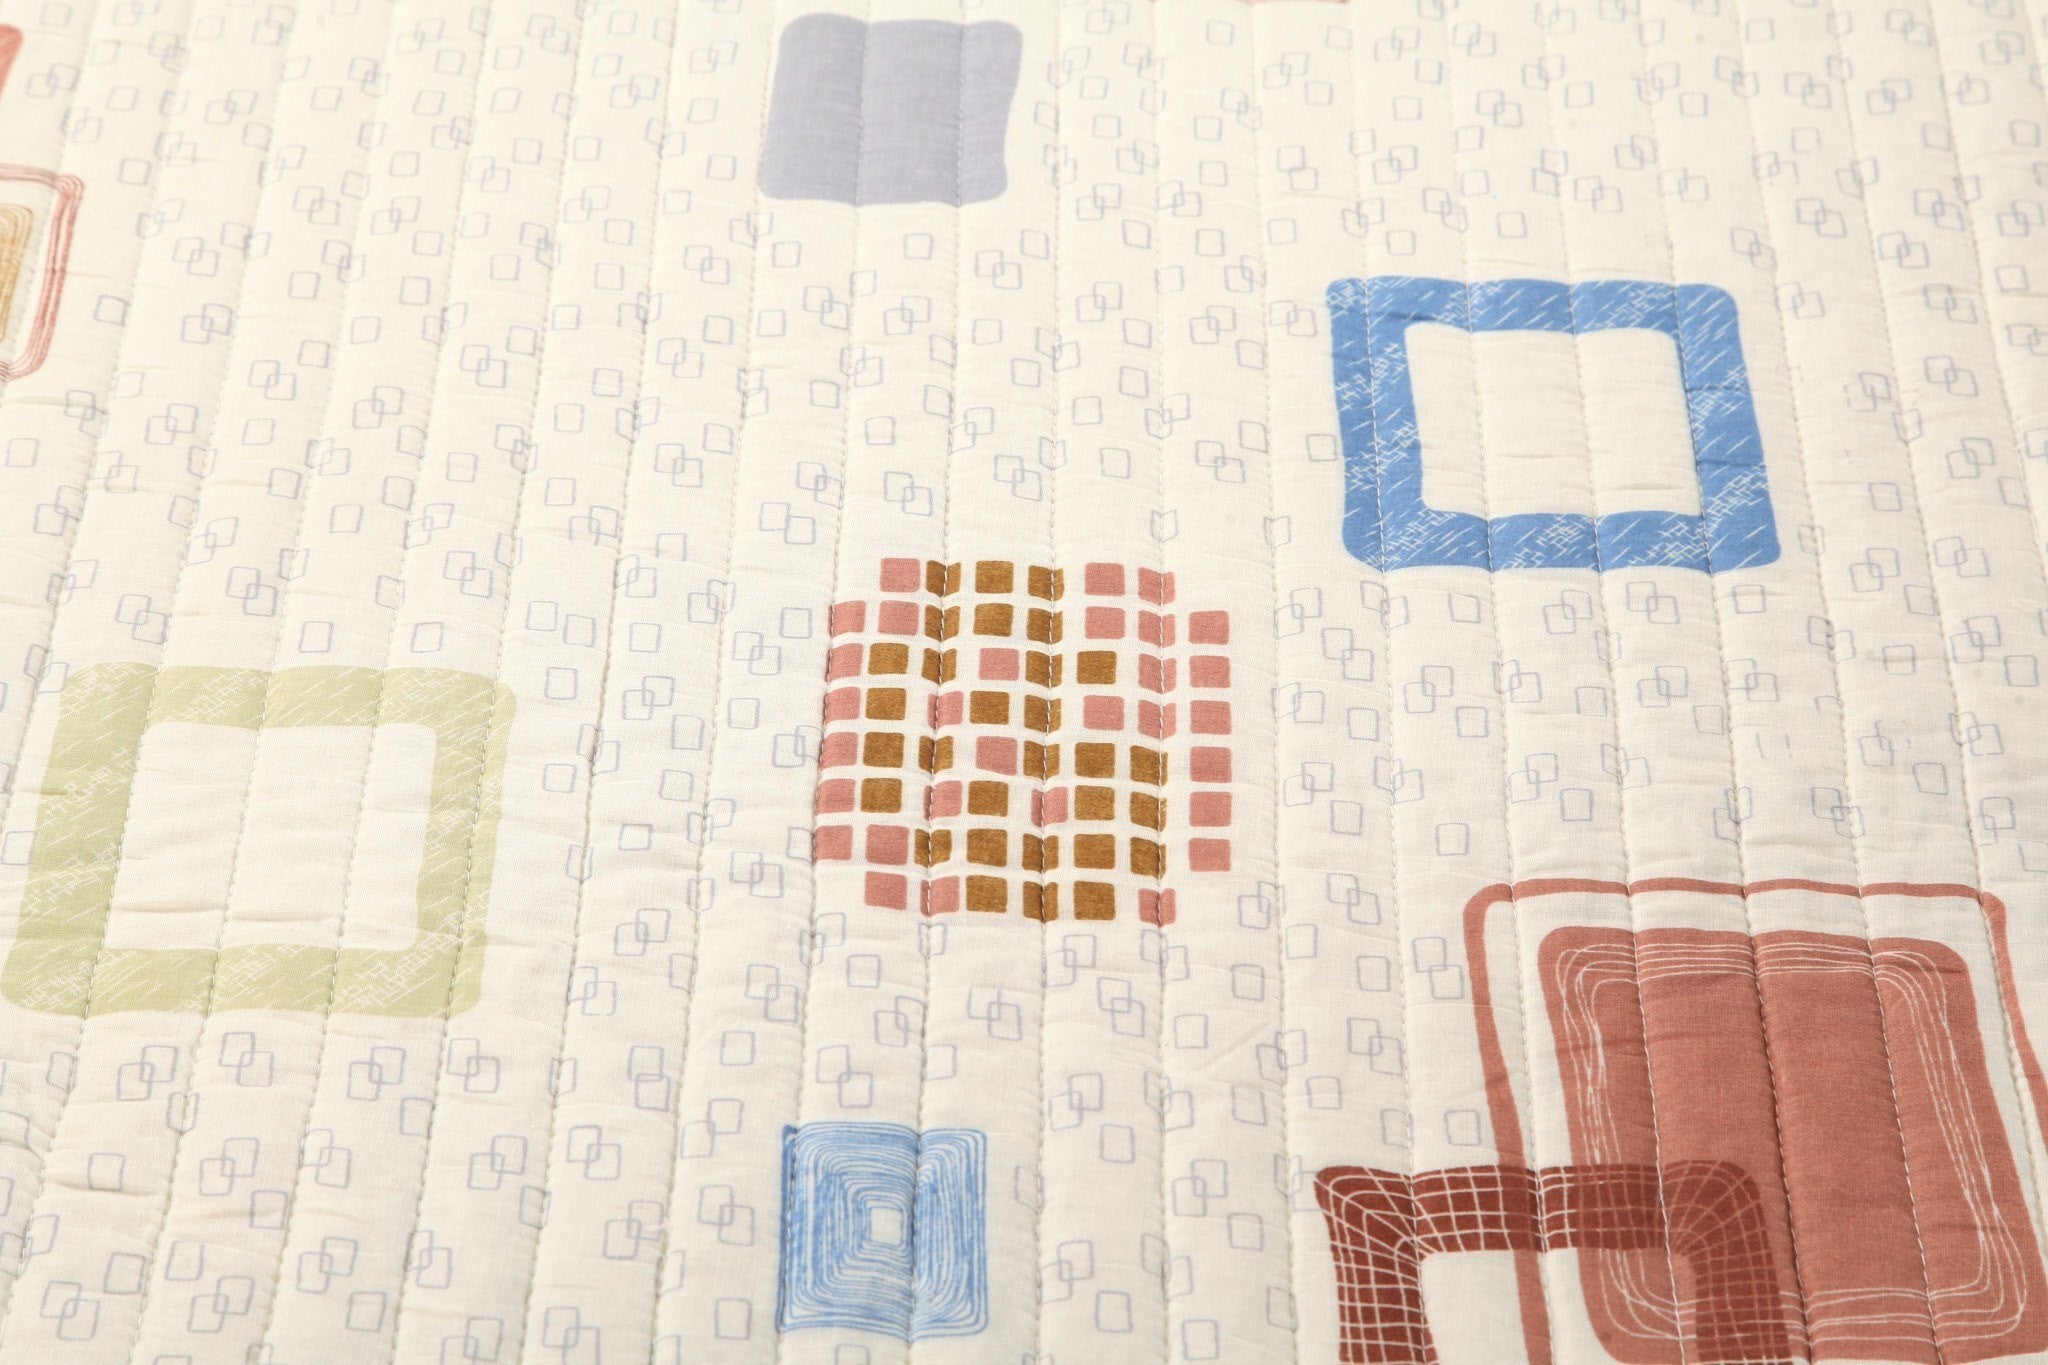 Tache Cotton Ivory Geometric Scalloped Cubic Squares Bedspread Set (DSW009) - Tache Home Fashion